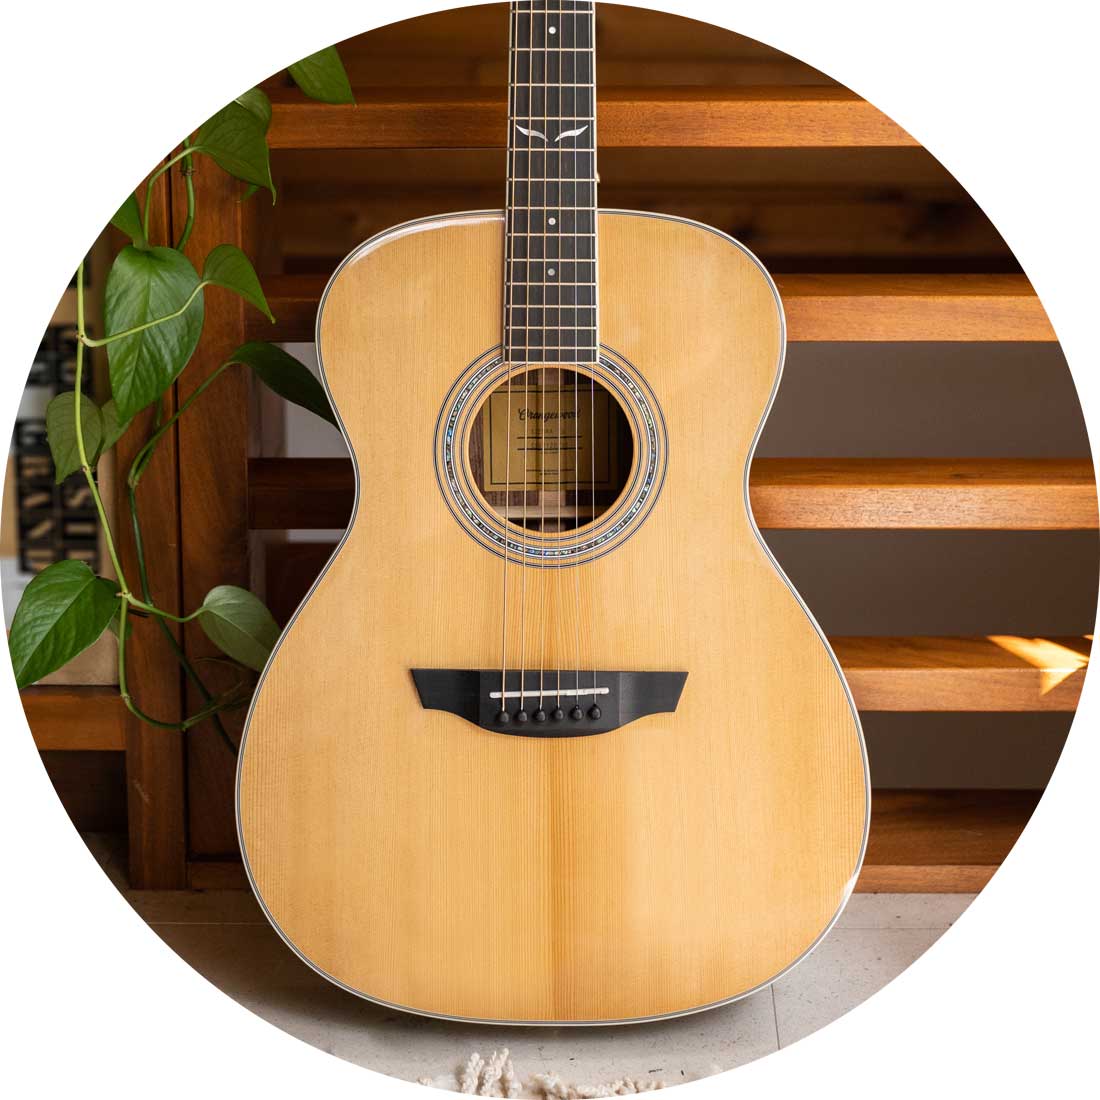 An Orangewood Sierra guitar leans against a wood wall with plants